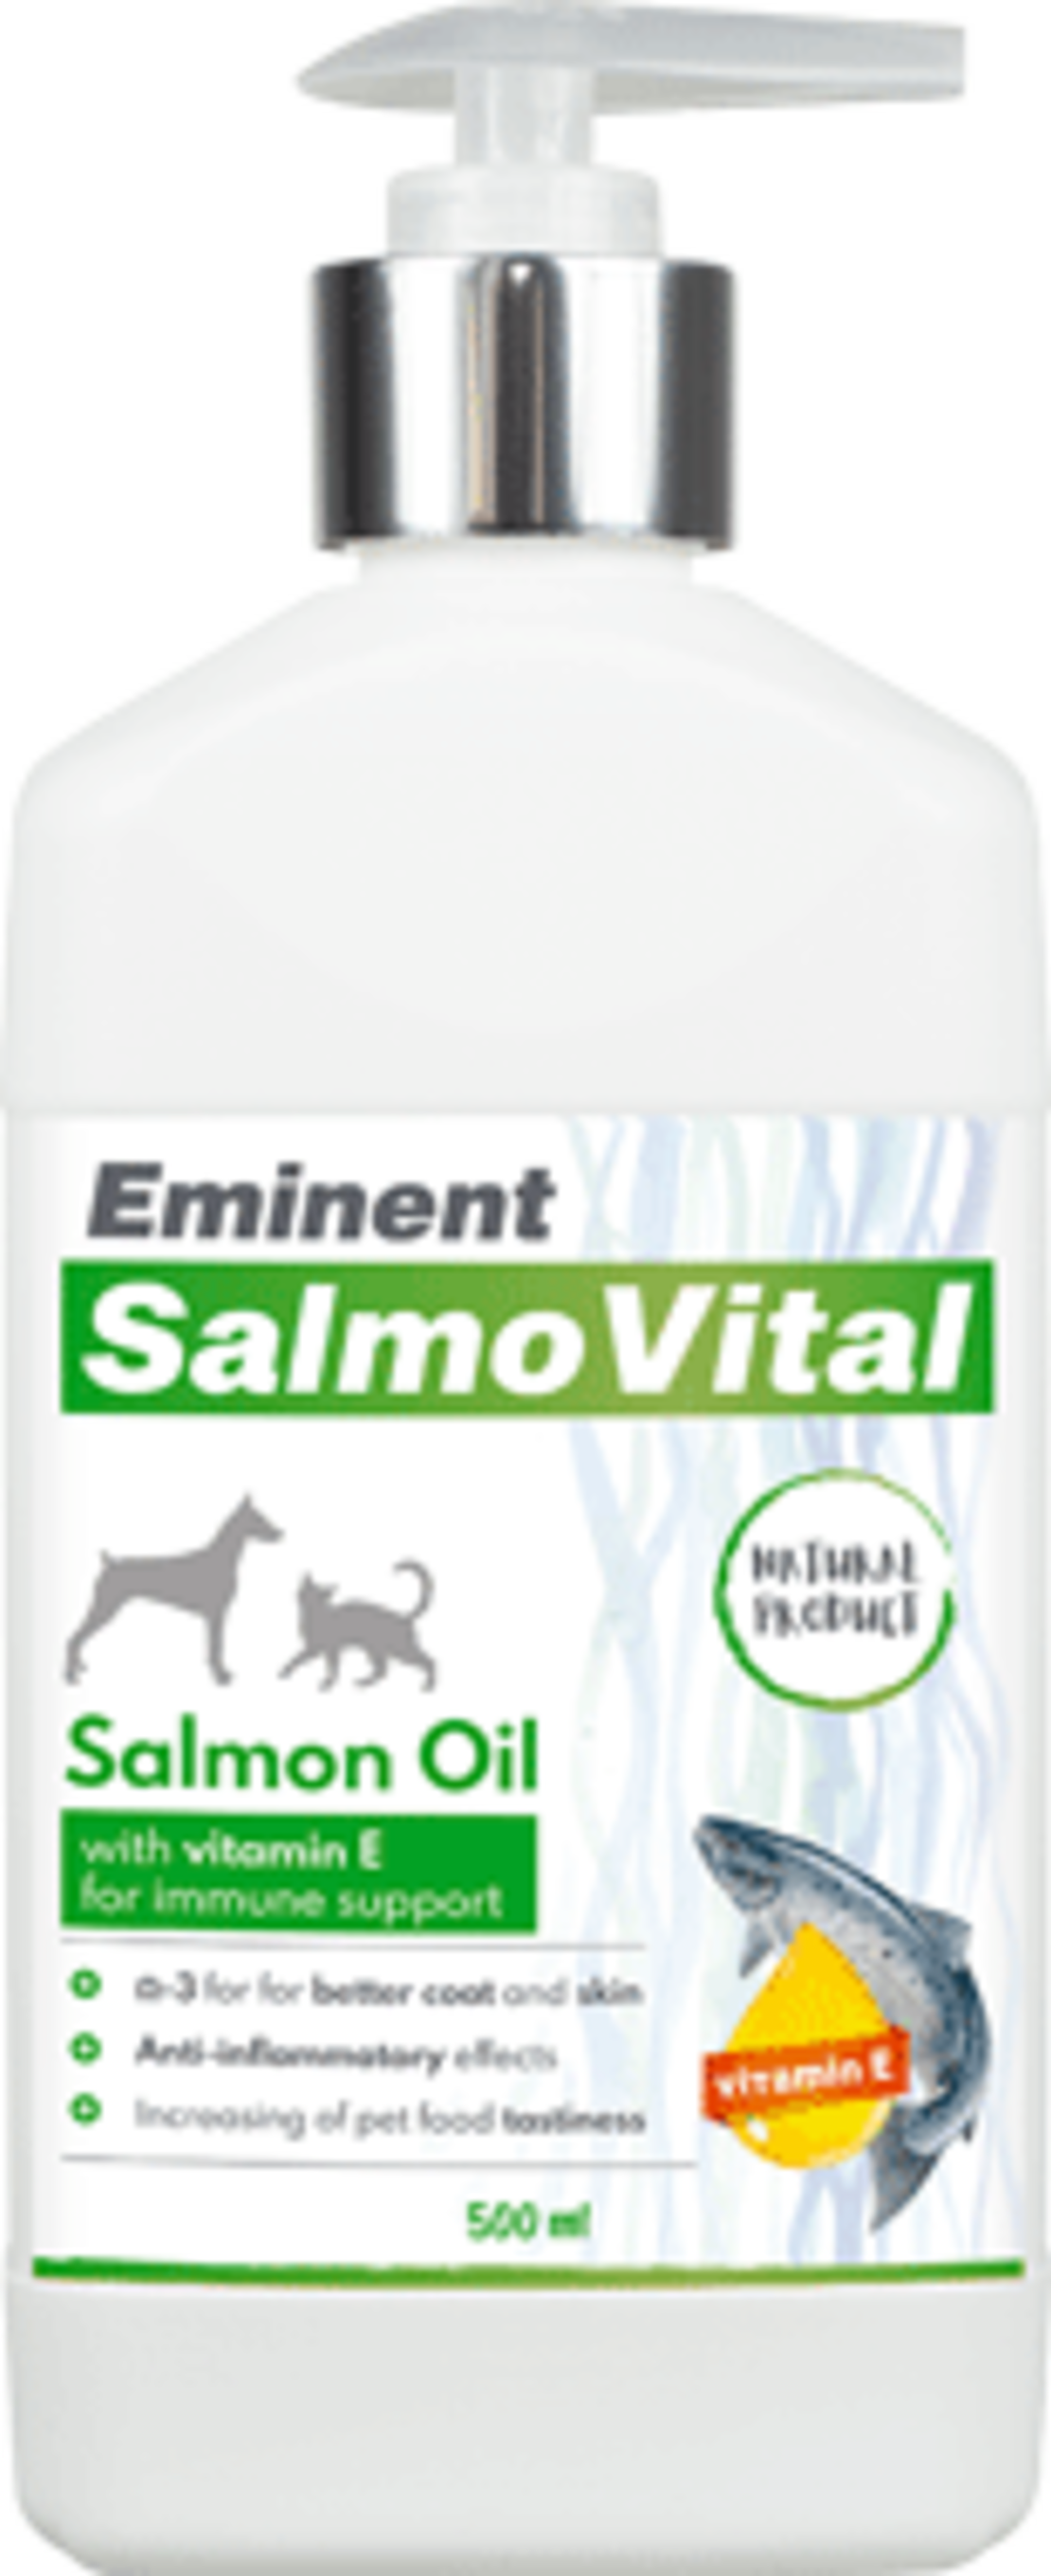 תוסף תזונה אמיננט שמן סלמון ויטל 0.5 ליטר | eminent salmon oil vital